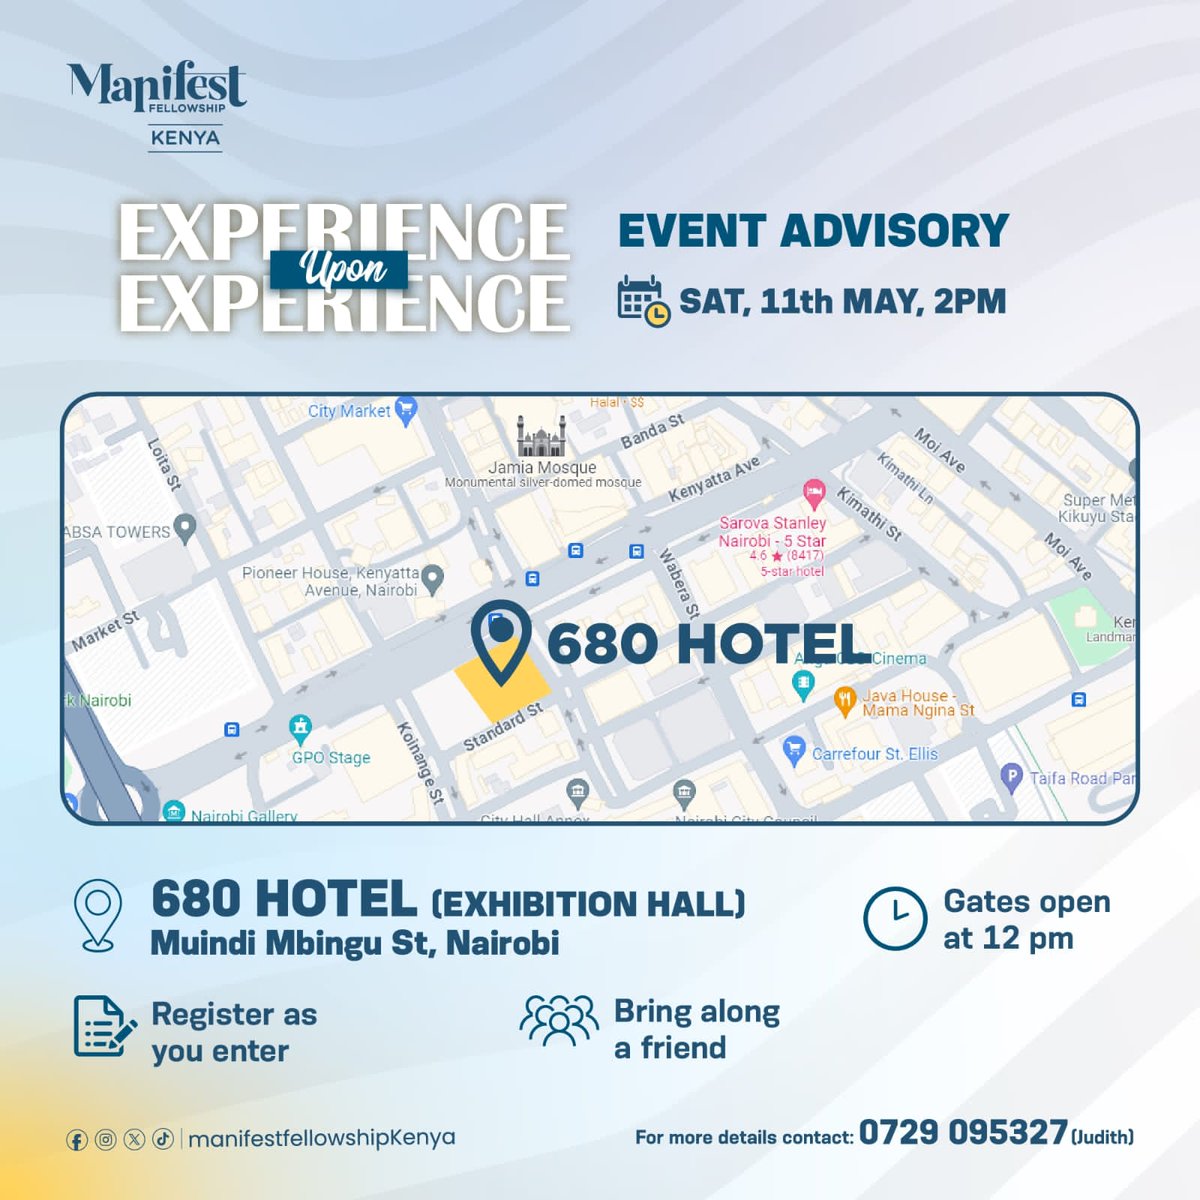 Event Advisory

#ExperienceUponExperience
#BringAFriend